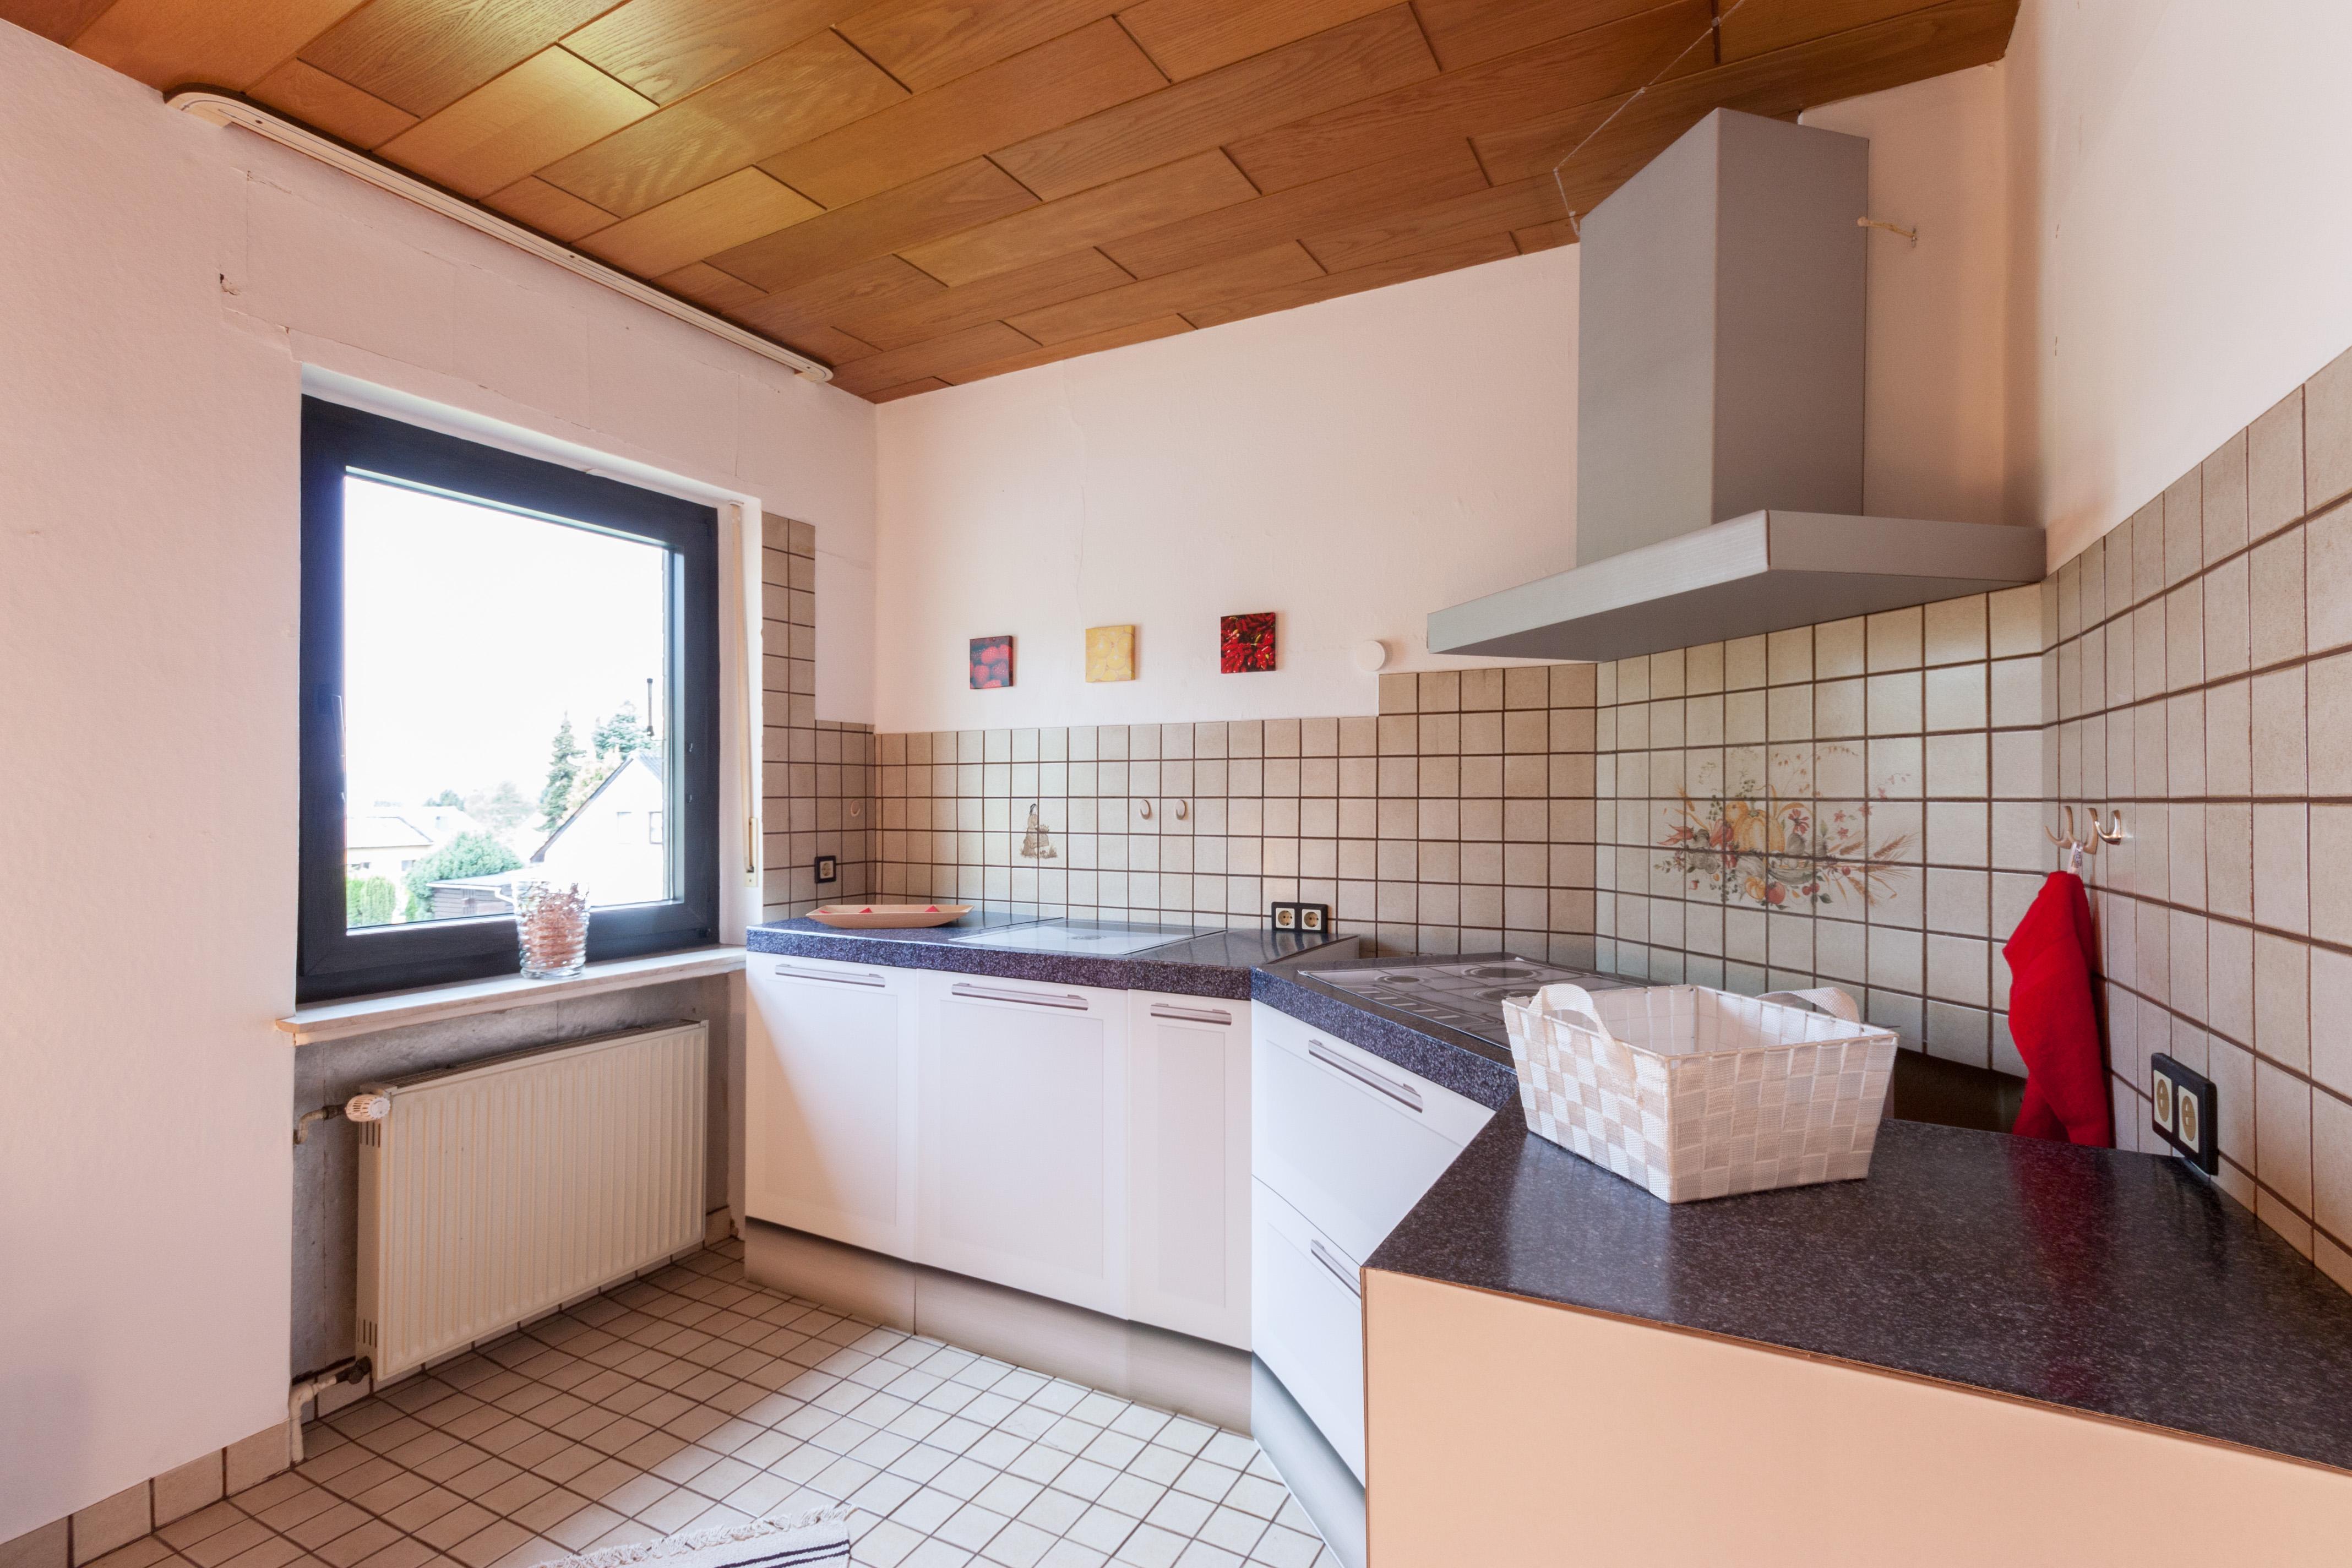 Küche - nachher #küche #holzdecke #wandfliesen #dunklerfensterrahmen ©IMMOTION Home Staging / Florian Gürbig